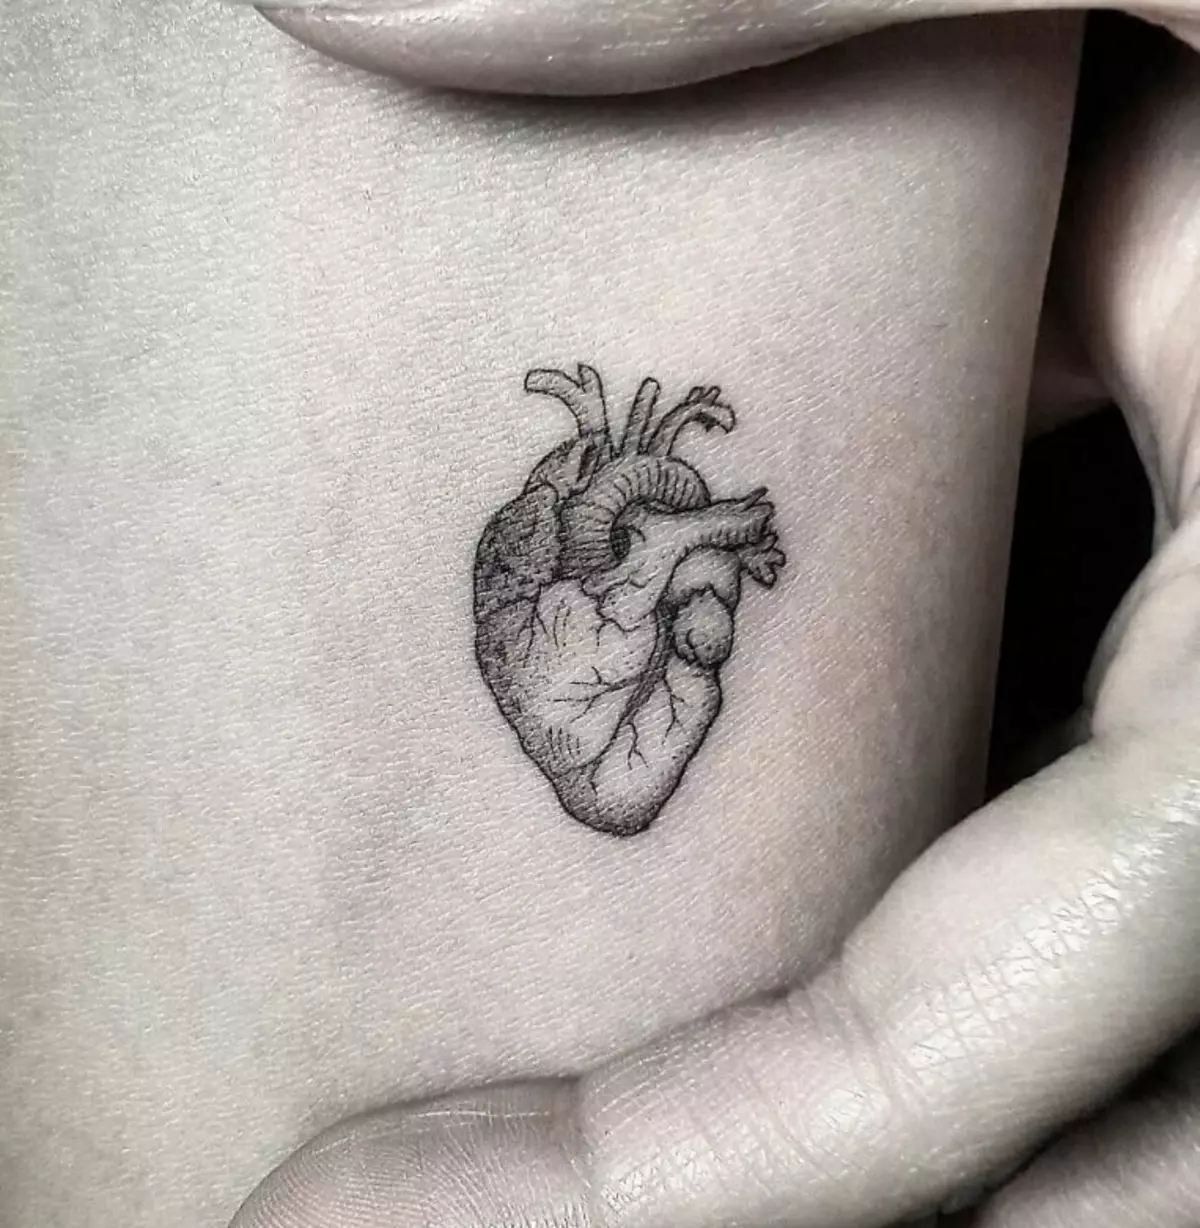 Tattoo of Heart (41 ფოტო): tattoos და მნიშვნელობა. Tattoo on მაჯის მხრივ და სხეულის სხვა ნაწილები. პატარა გატეხილი გული და სხვა ვარიანტი 14022_36